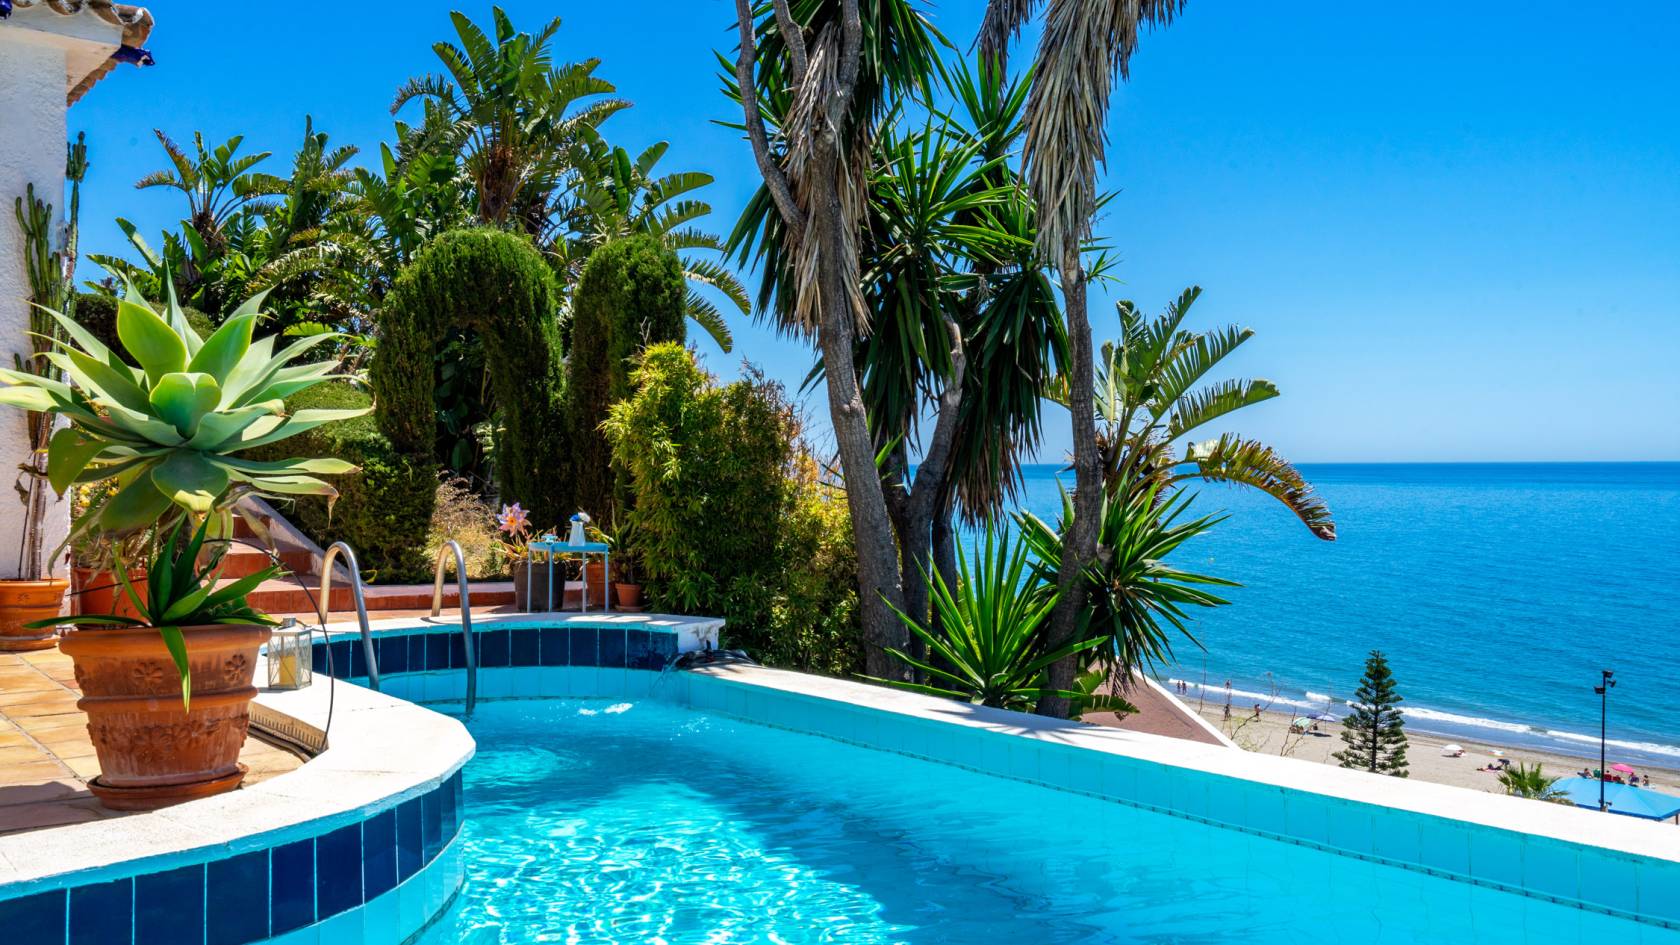 Uncover the Best Villas to Rent in Costa del Sol